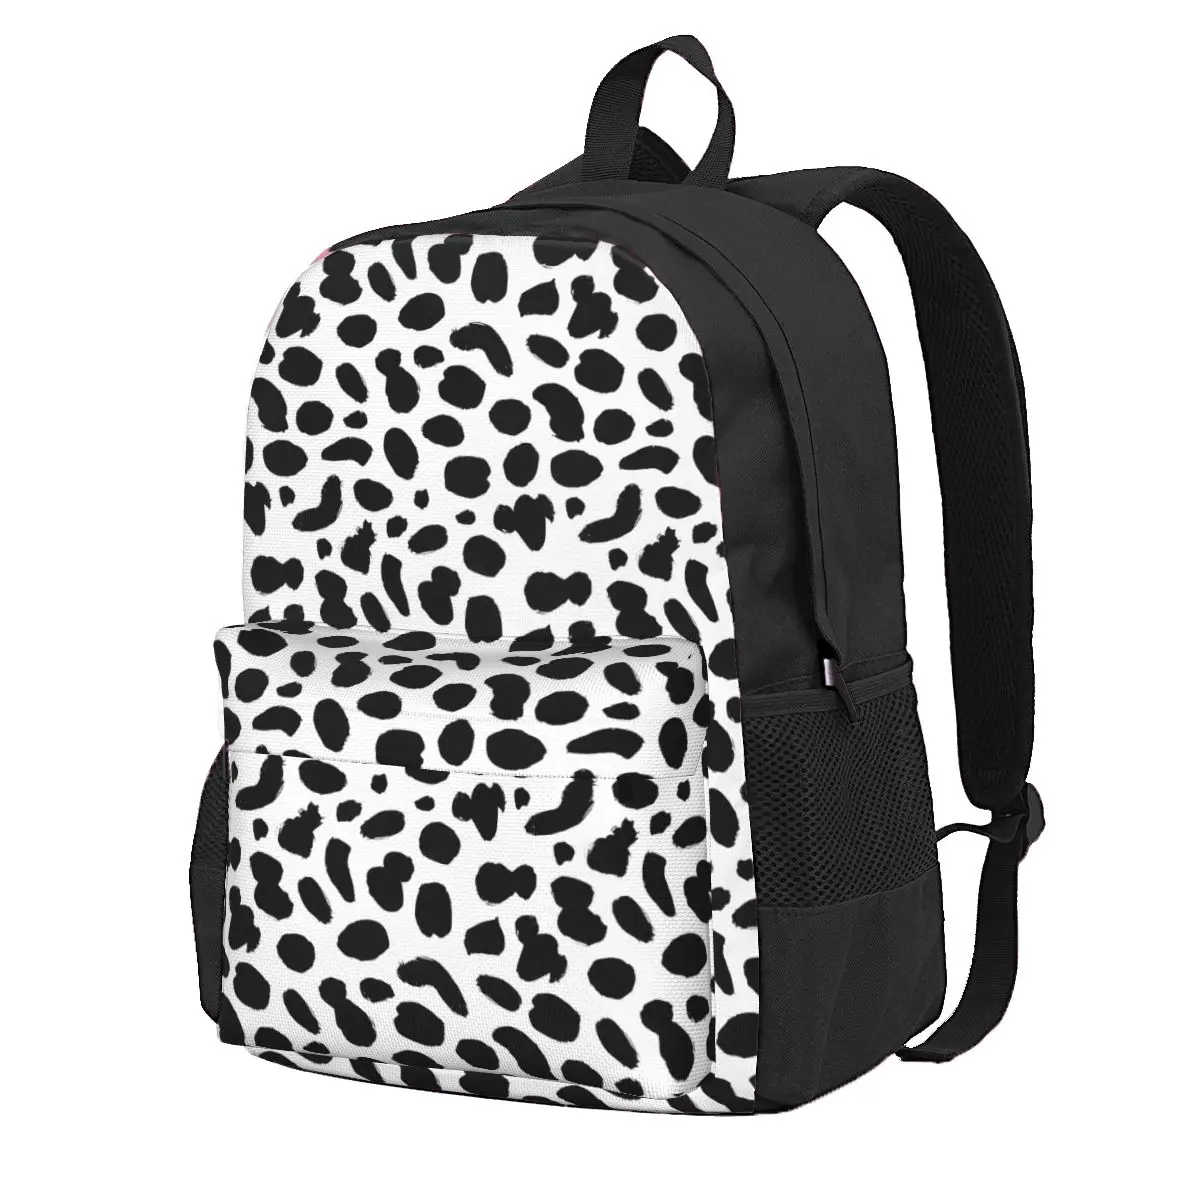 

Dalmatian Print Backpack Black Spots Boy Polyester Travel Backpacks Pattern Style School Bags Rucksack